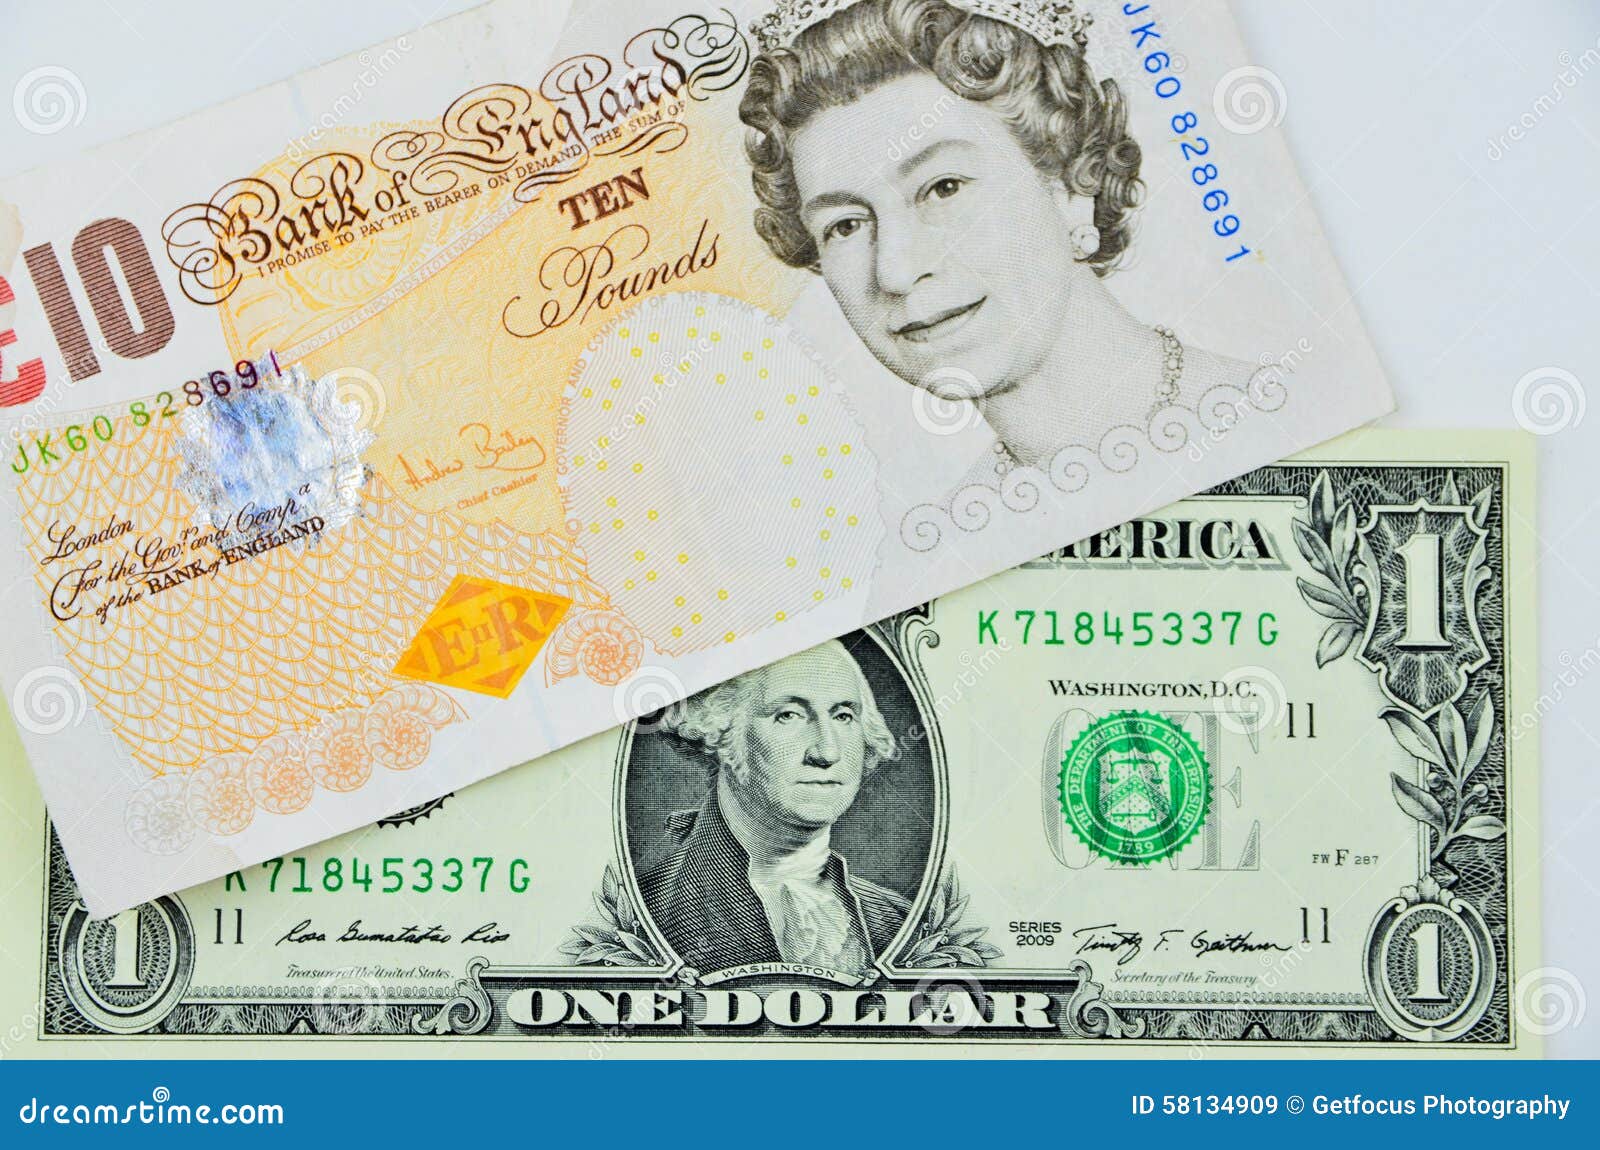 convert british pounds to u.s.dollars